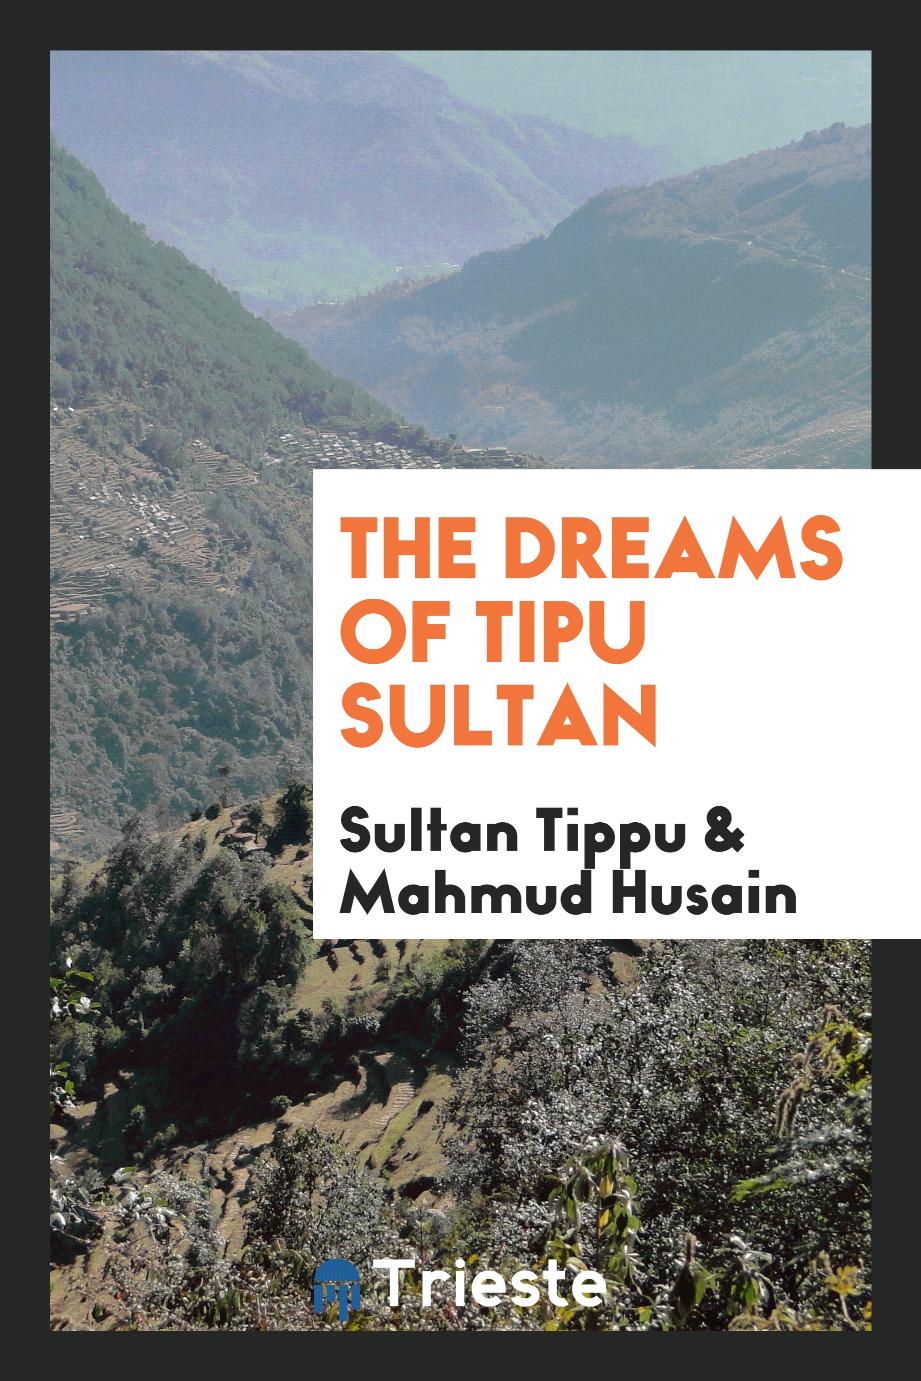 The dreams of Tipu Sultan